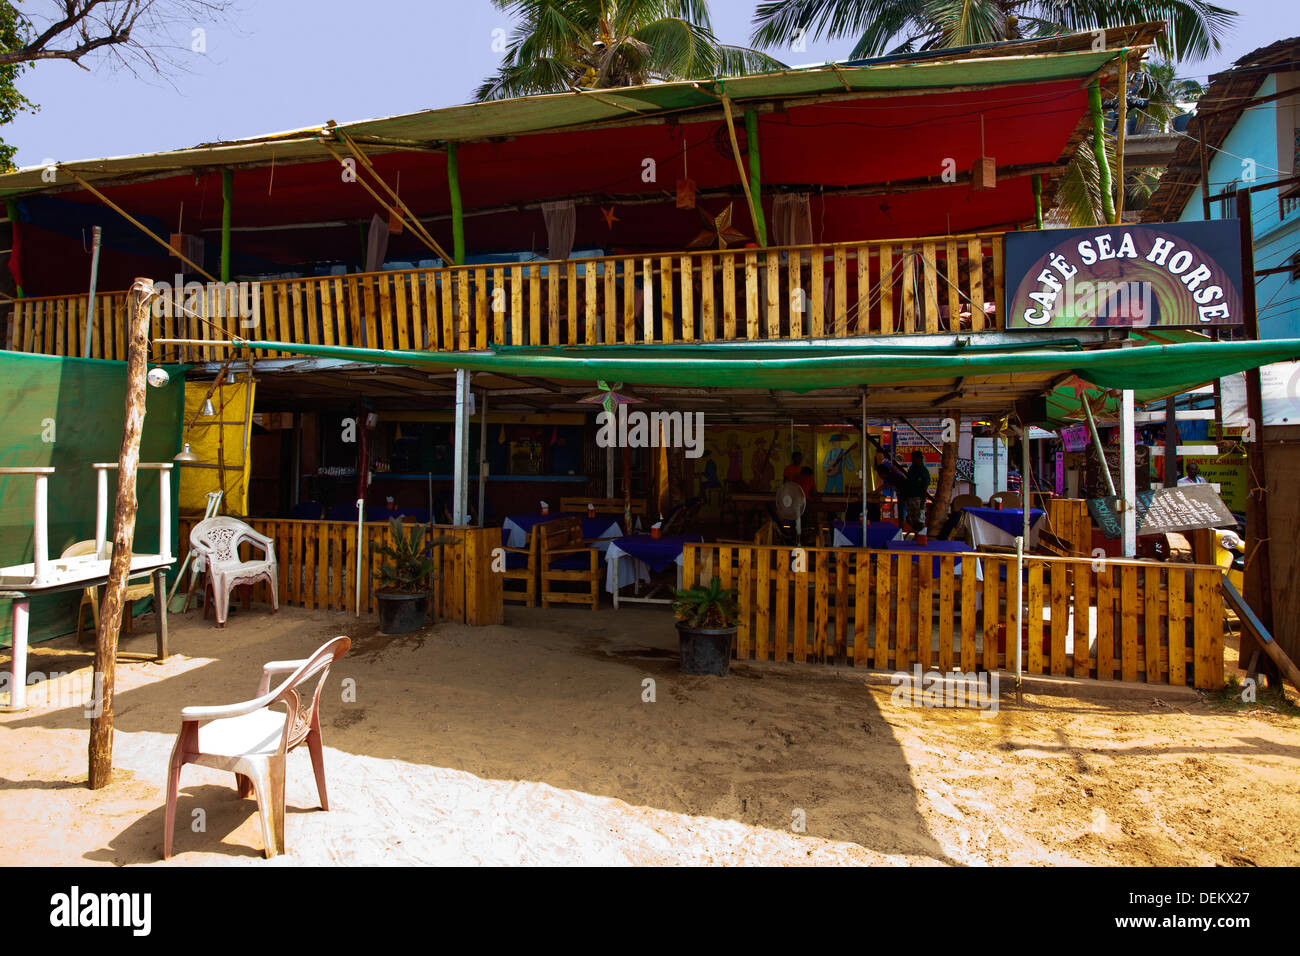 Facade of a restaurant, Blue Sea Horse, Arambol Beach, Arambol, North Goa, Goa, India Stock Photo